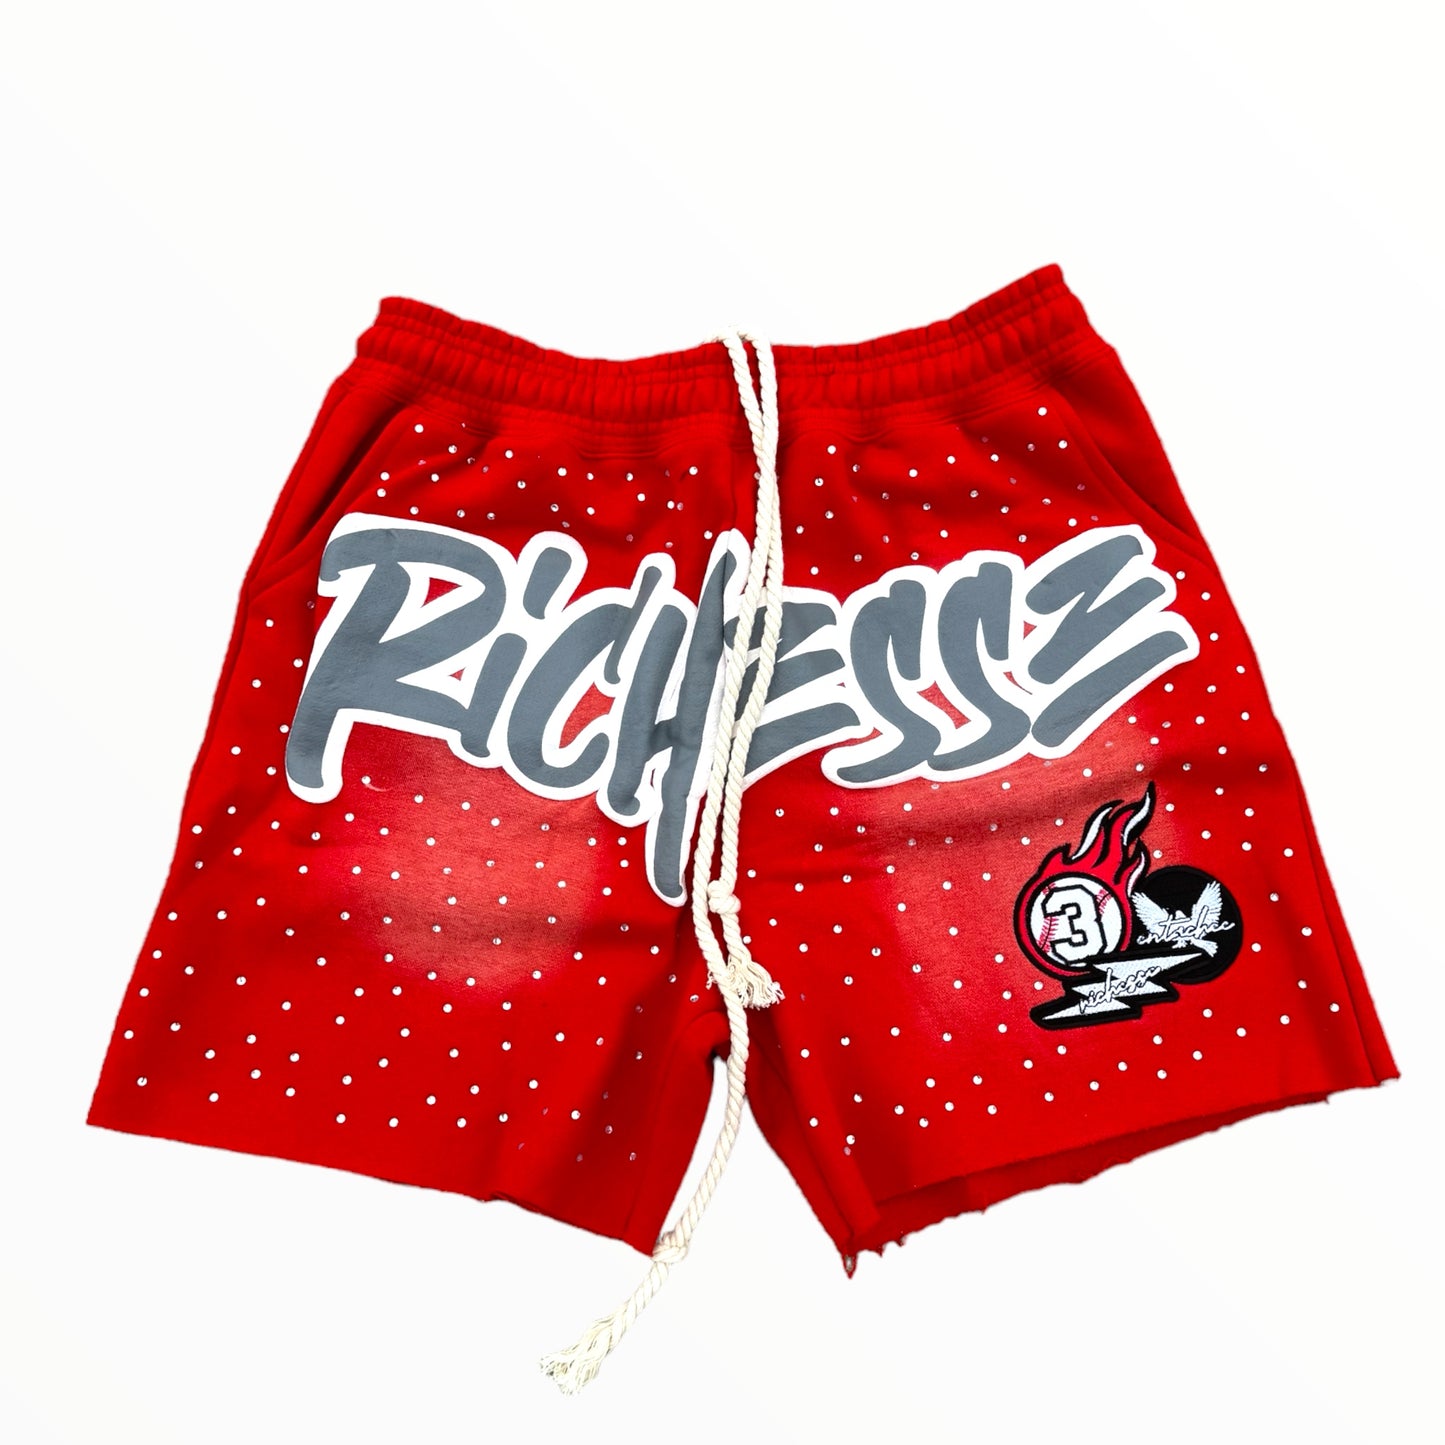 Richesse Rhinestone Shorts Red